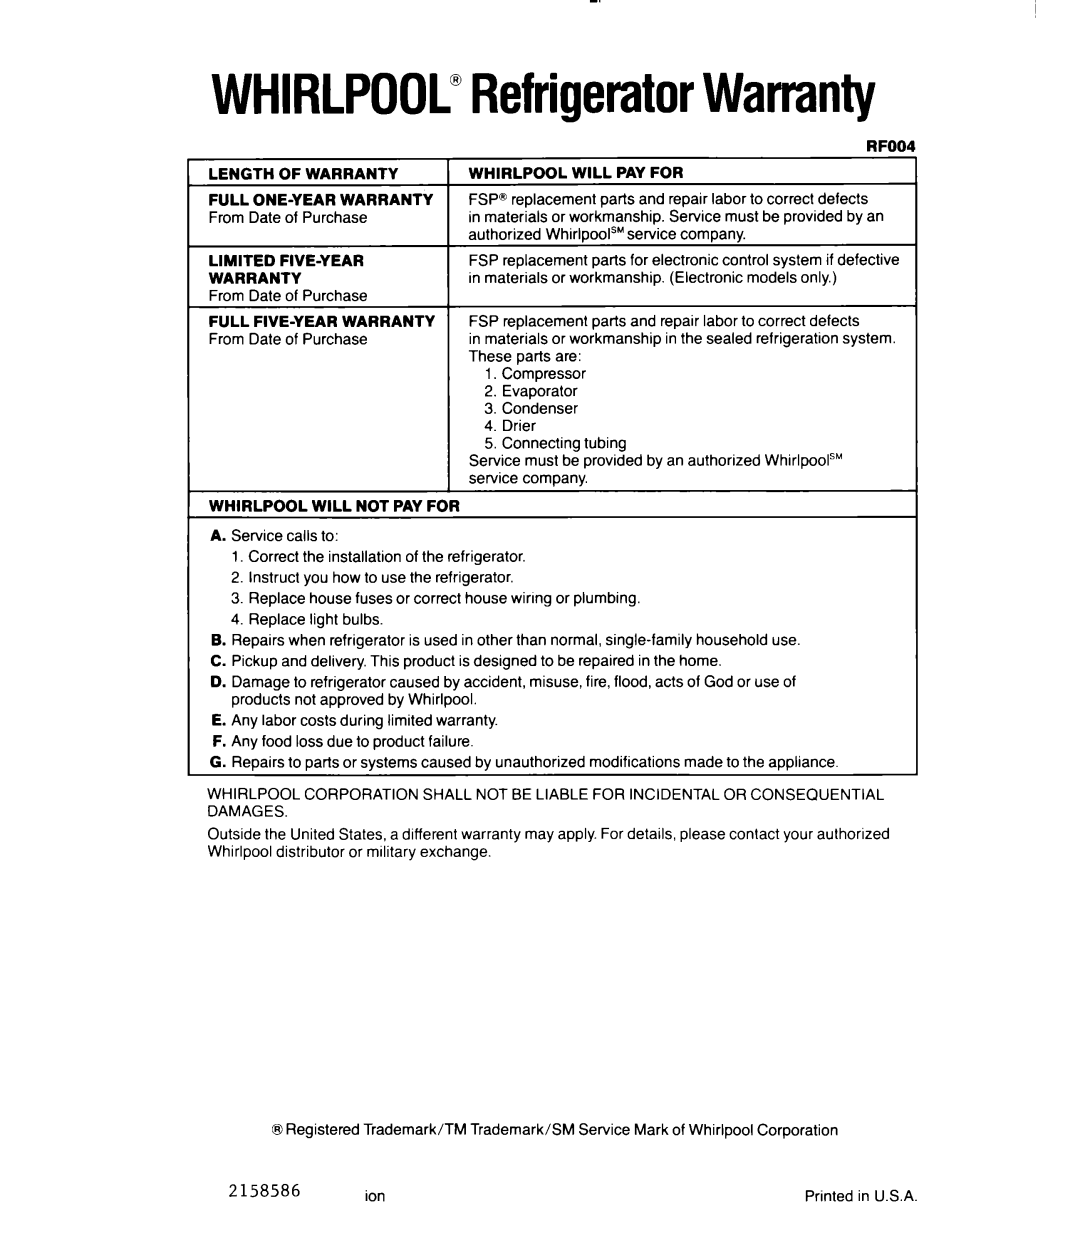 Whirlpool 3Ell8GK manual WHIRLPOOL”RefrigeratorWarranty 